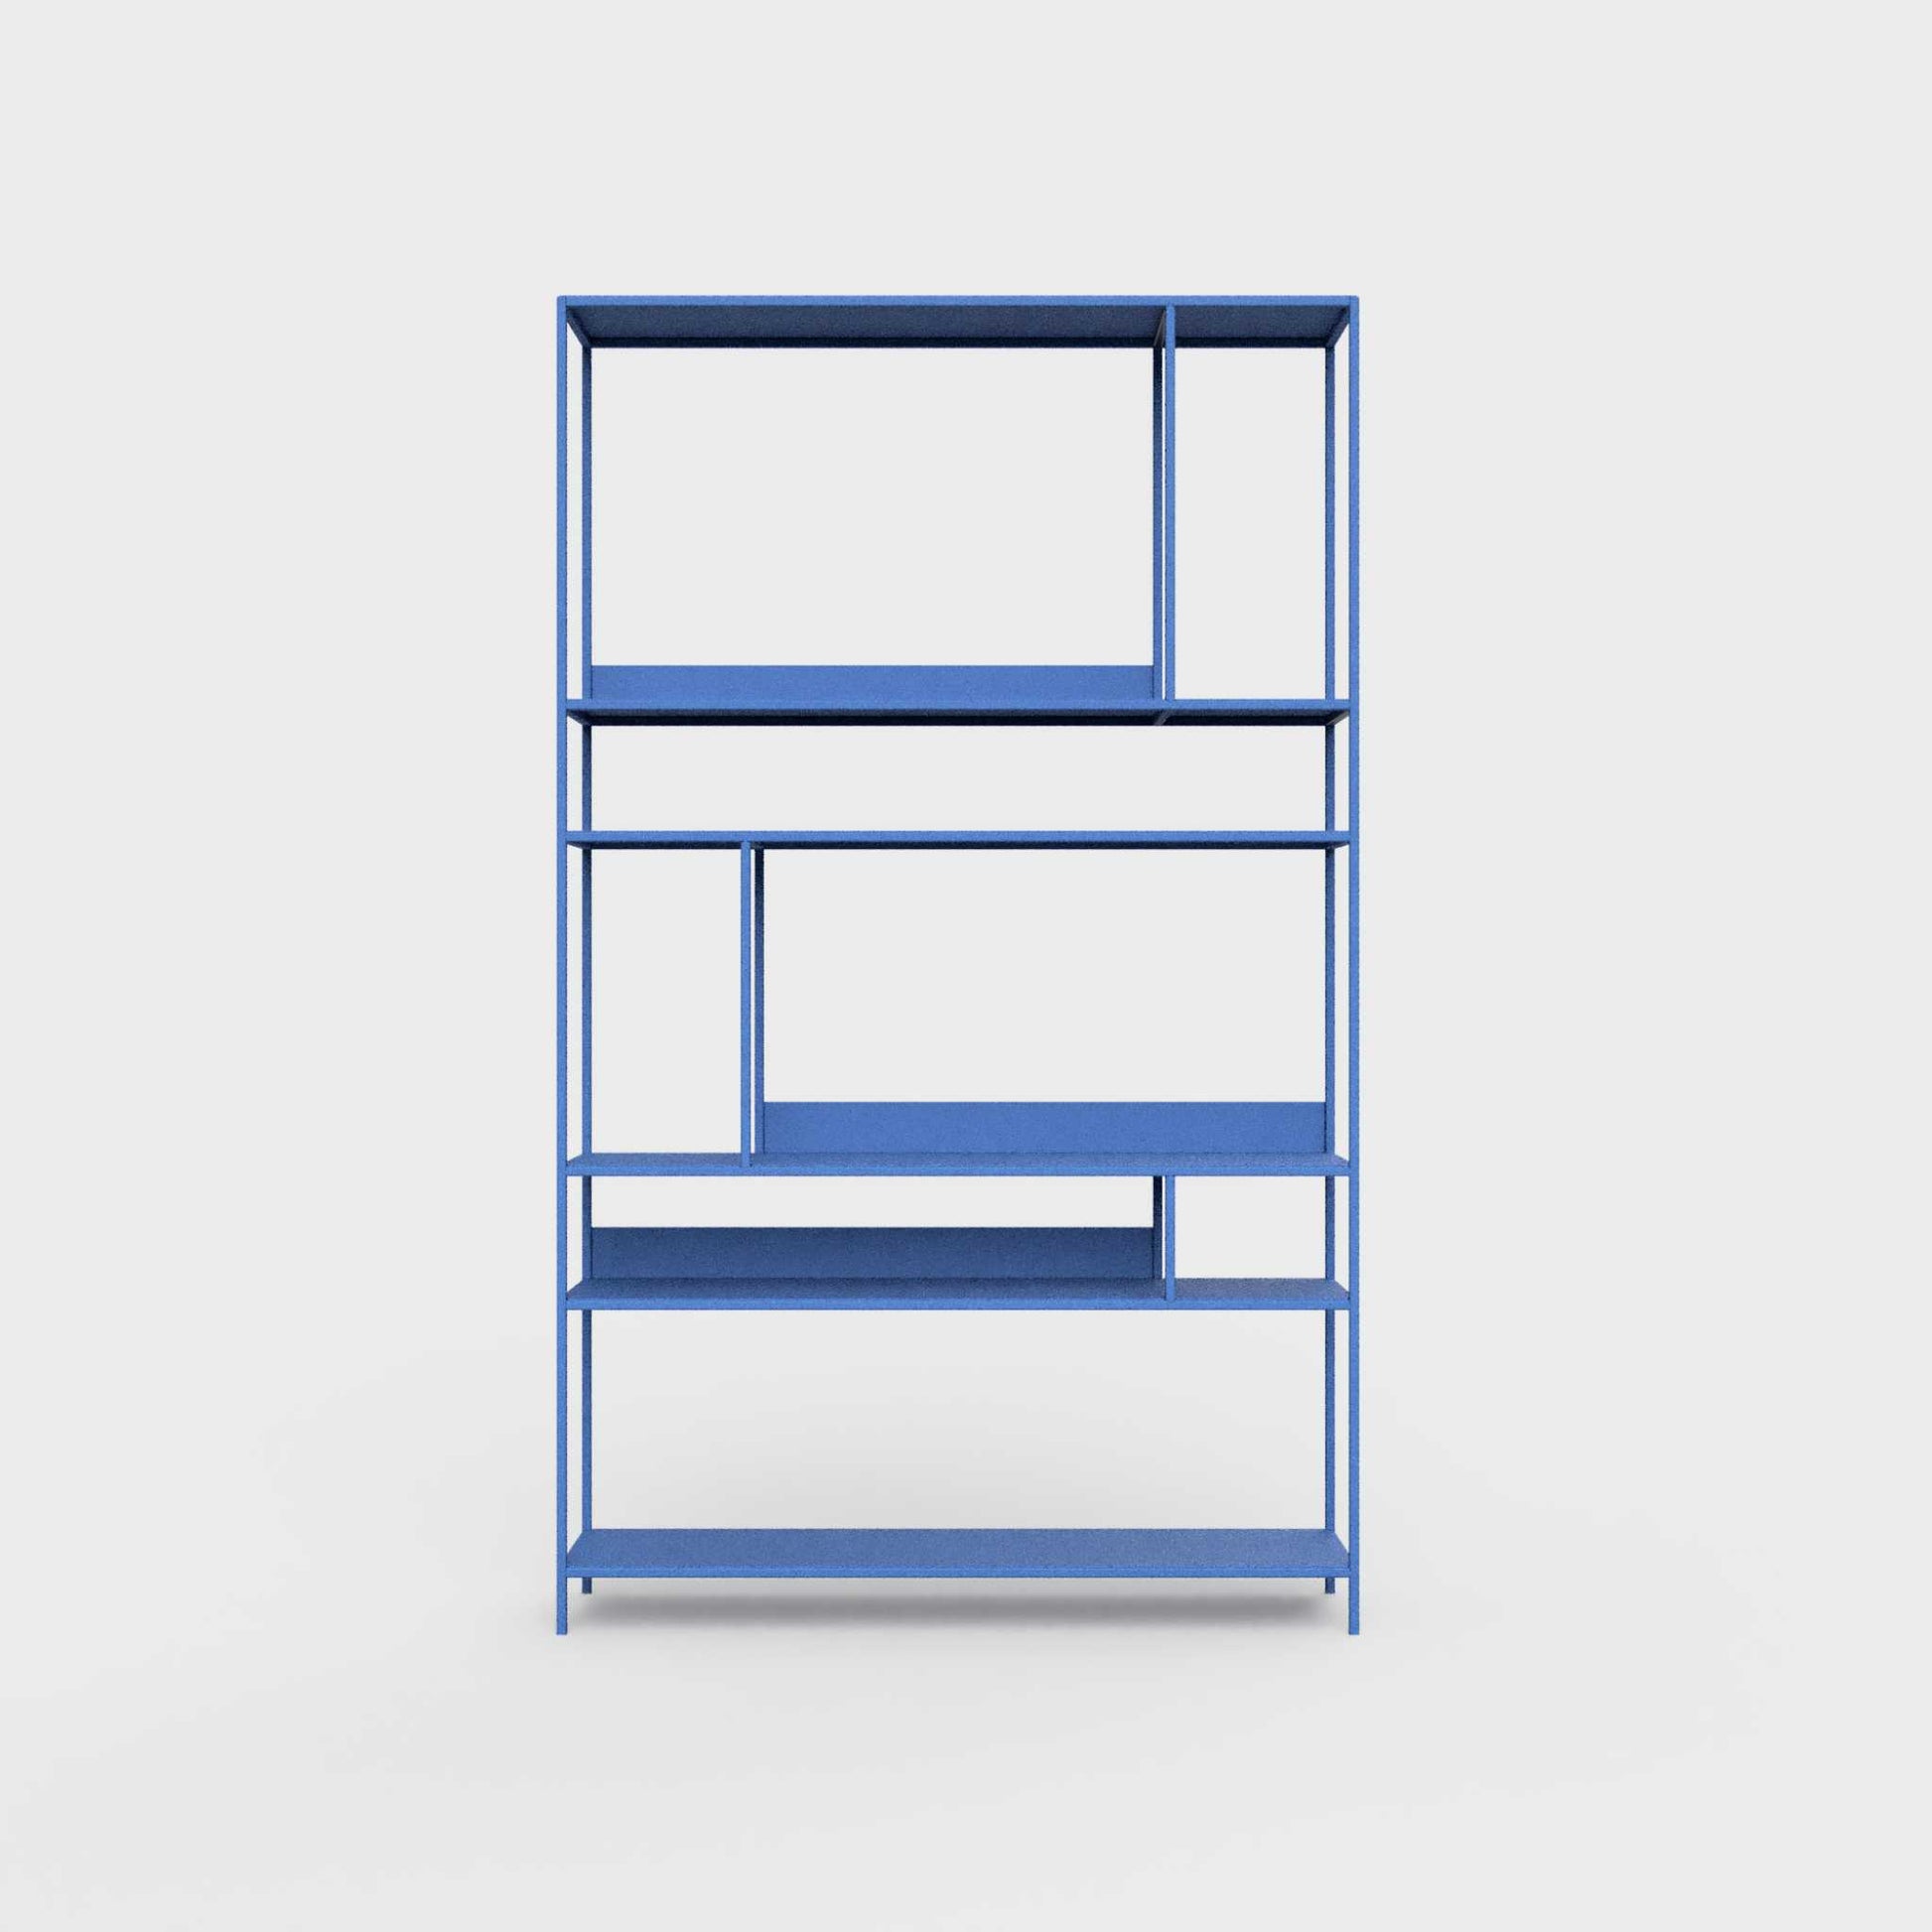 ÉTAUDORÉ Floks 01 powder coated steel bookcase in azure blue